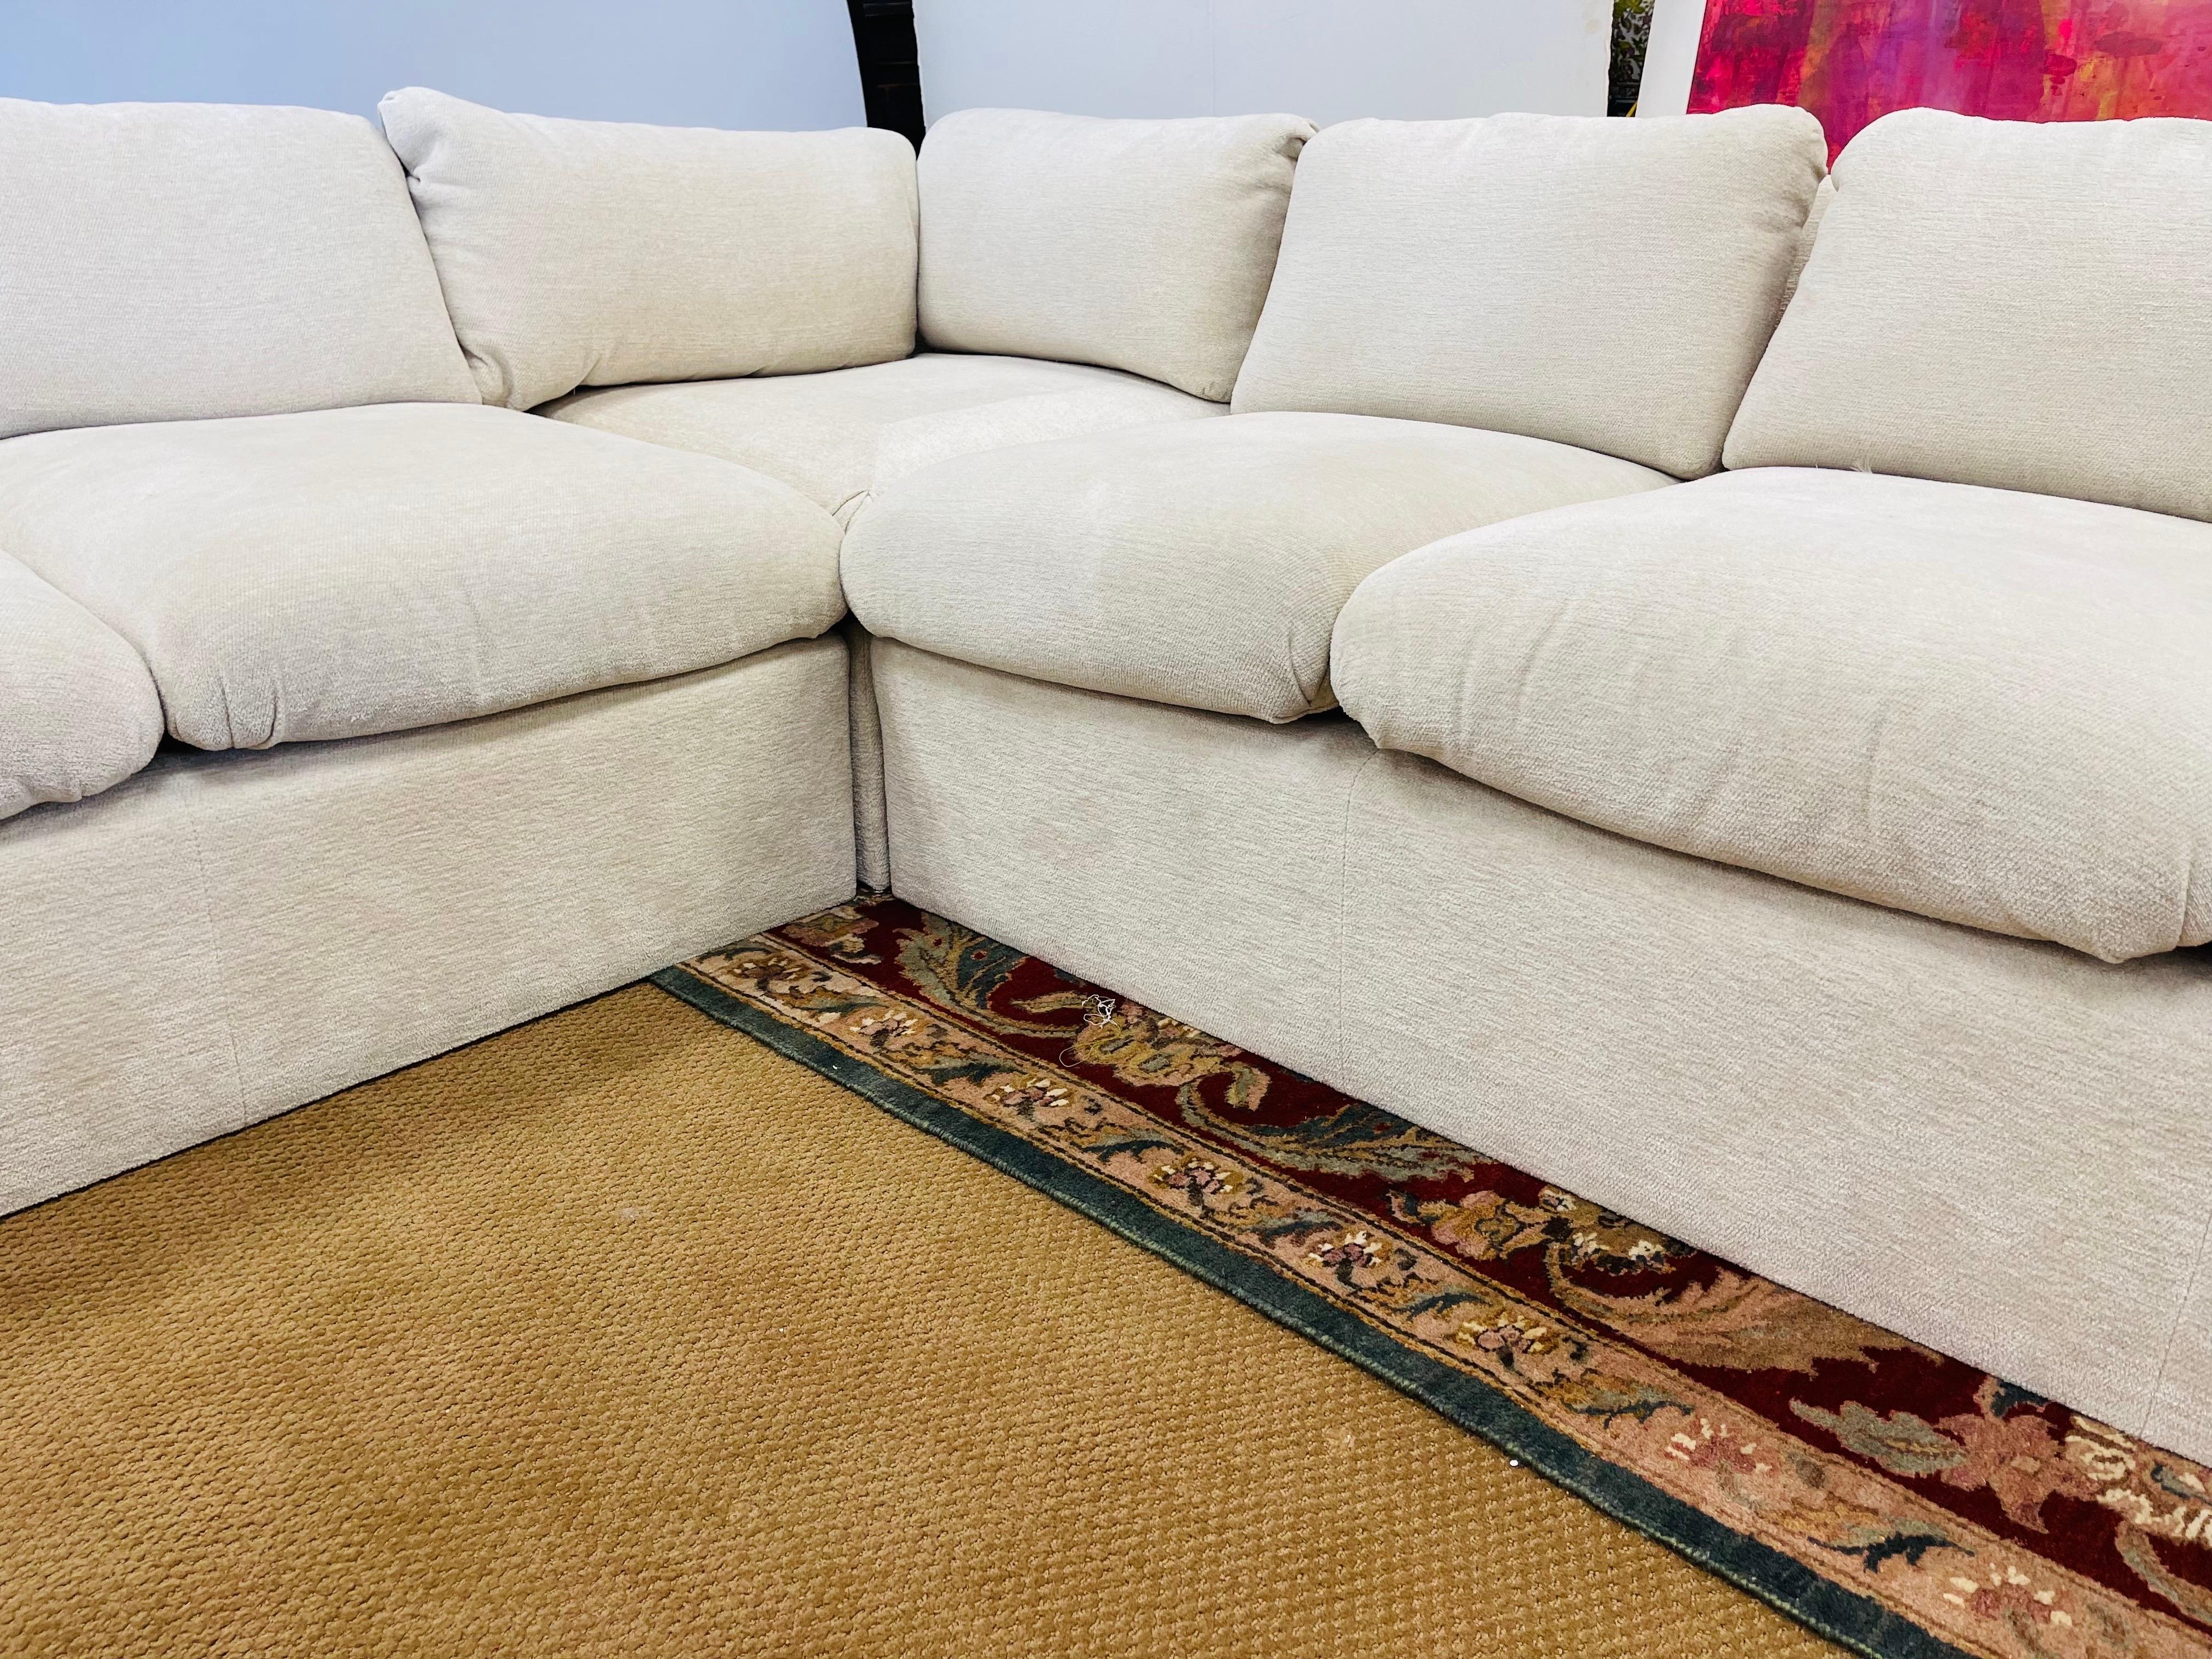 Mid-Century Modern J. Robert Scott Designer Sectional Sofa 3-Piece in L-Shape with Chenille Fabric